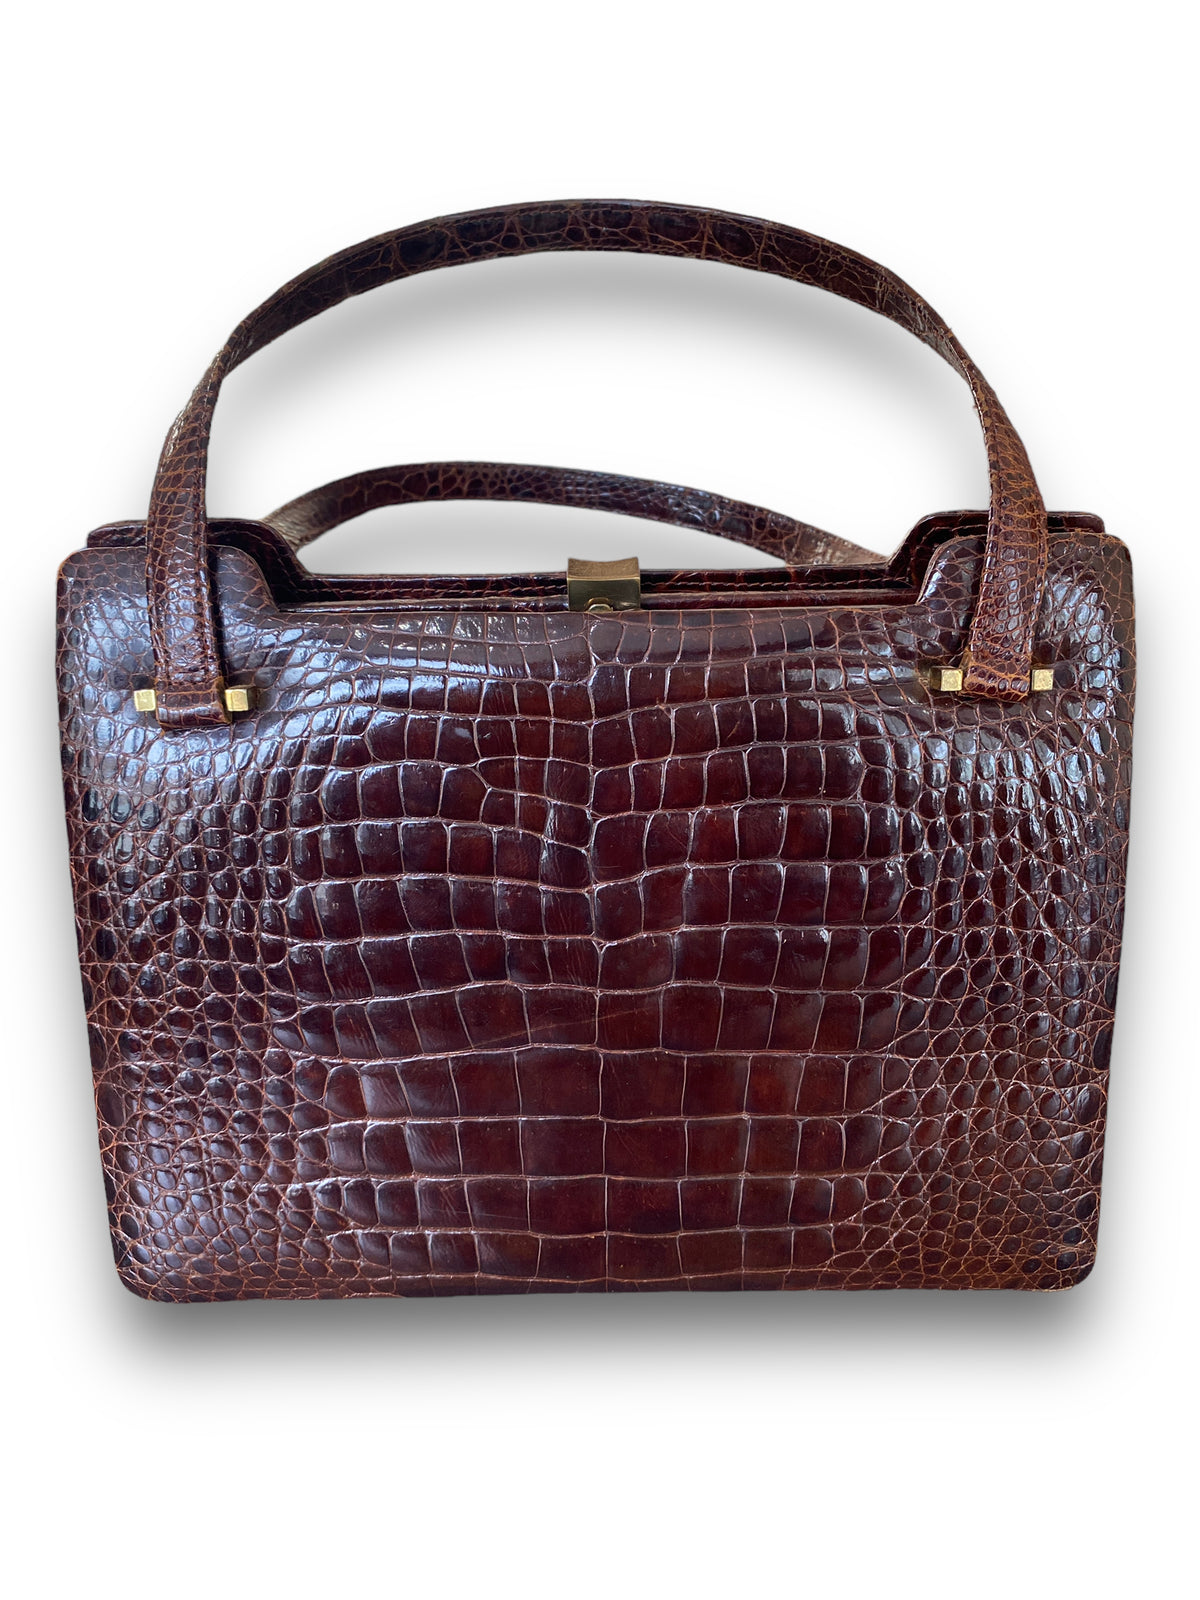 Made in West Germany brown alligator skin handbag